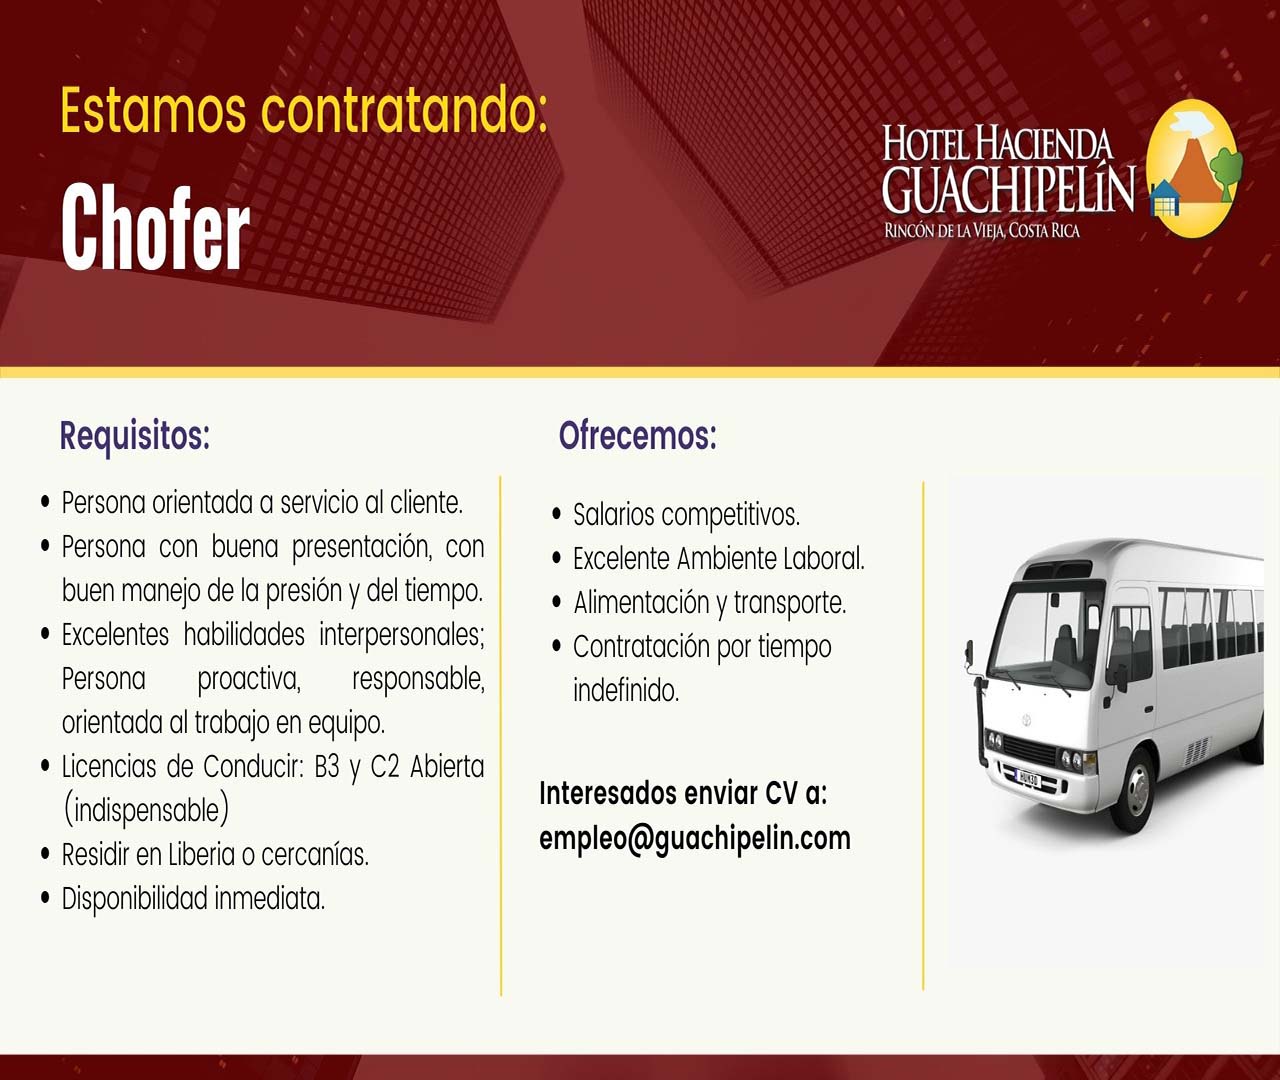 Hotel Hacienda Guachipelin Requiere Contratar: Chofer.alt